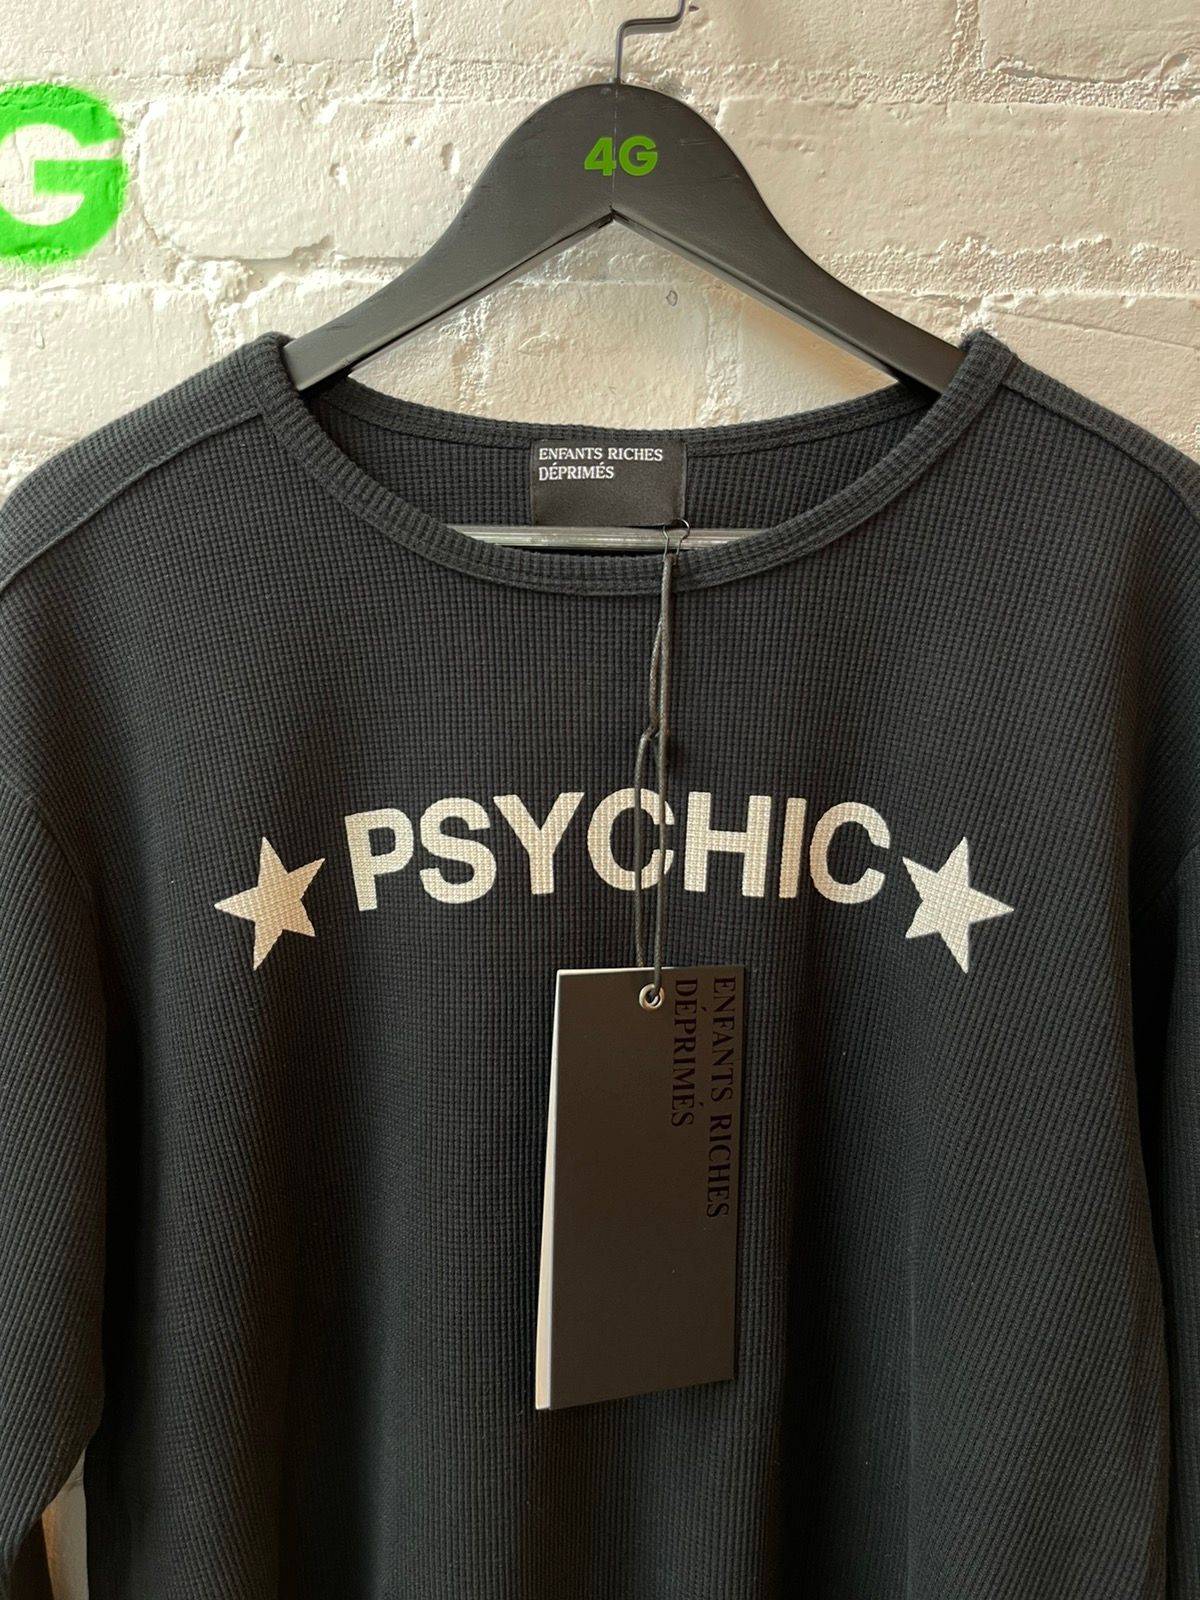 Pre-owned Enfants Riches Deprimes Erd Psychic New 3/4 Black Sweater Shirt